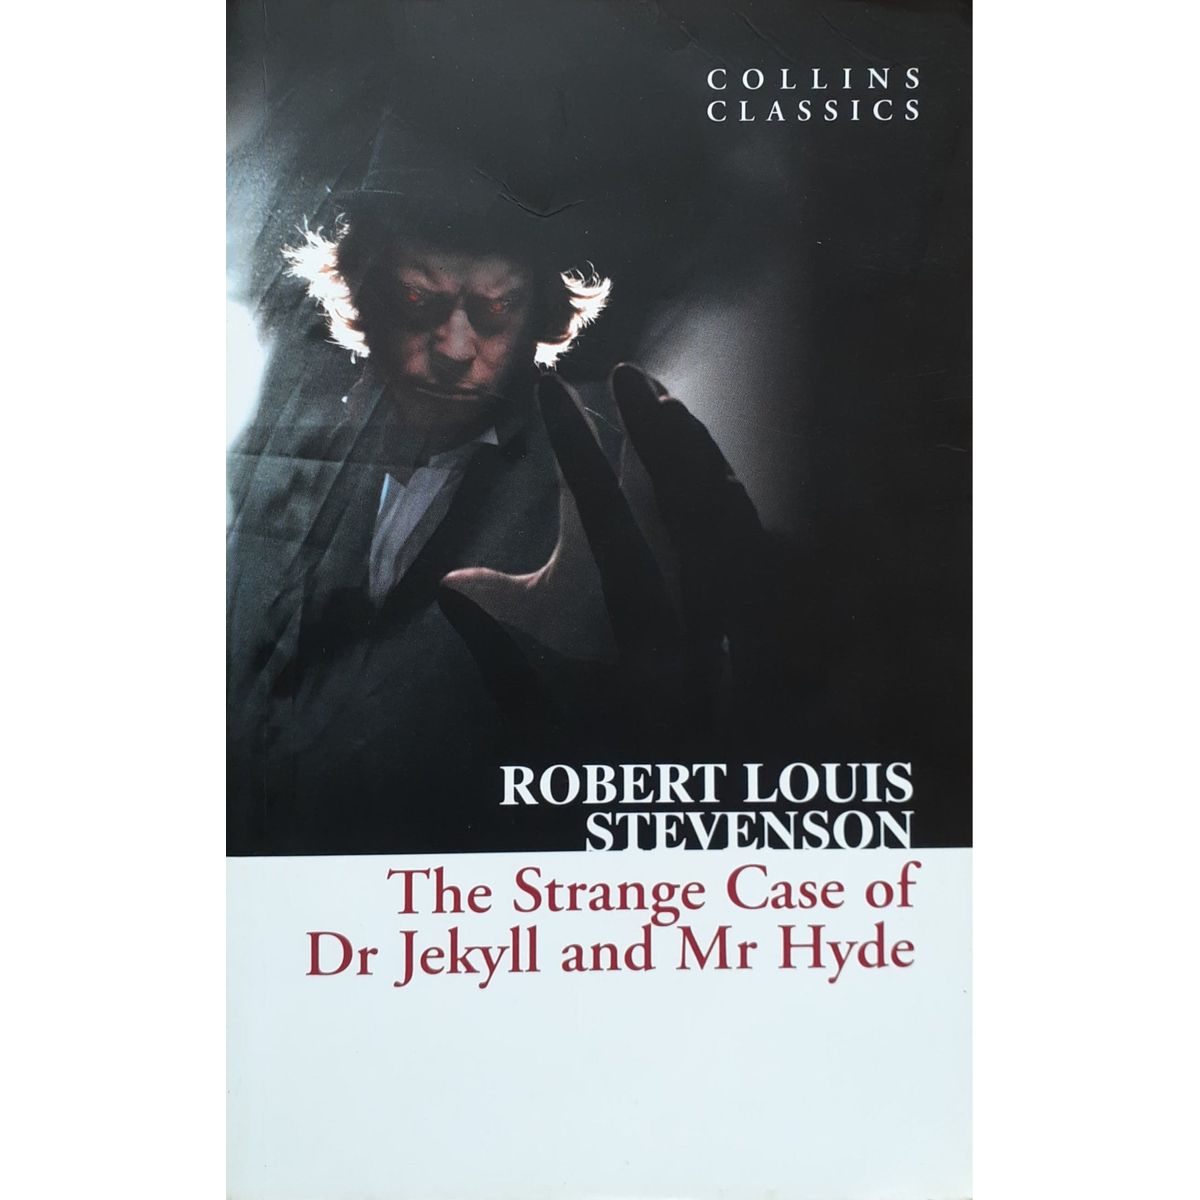 ISBN: 9780007351008 / 0007351003 - The Strange Case of Dr Jekyll and Mr Hyde by Robert Louis Stevenson [2010]